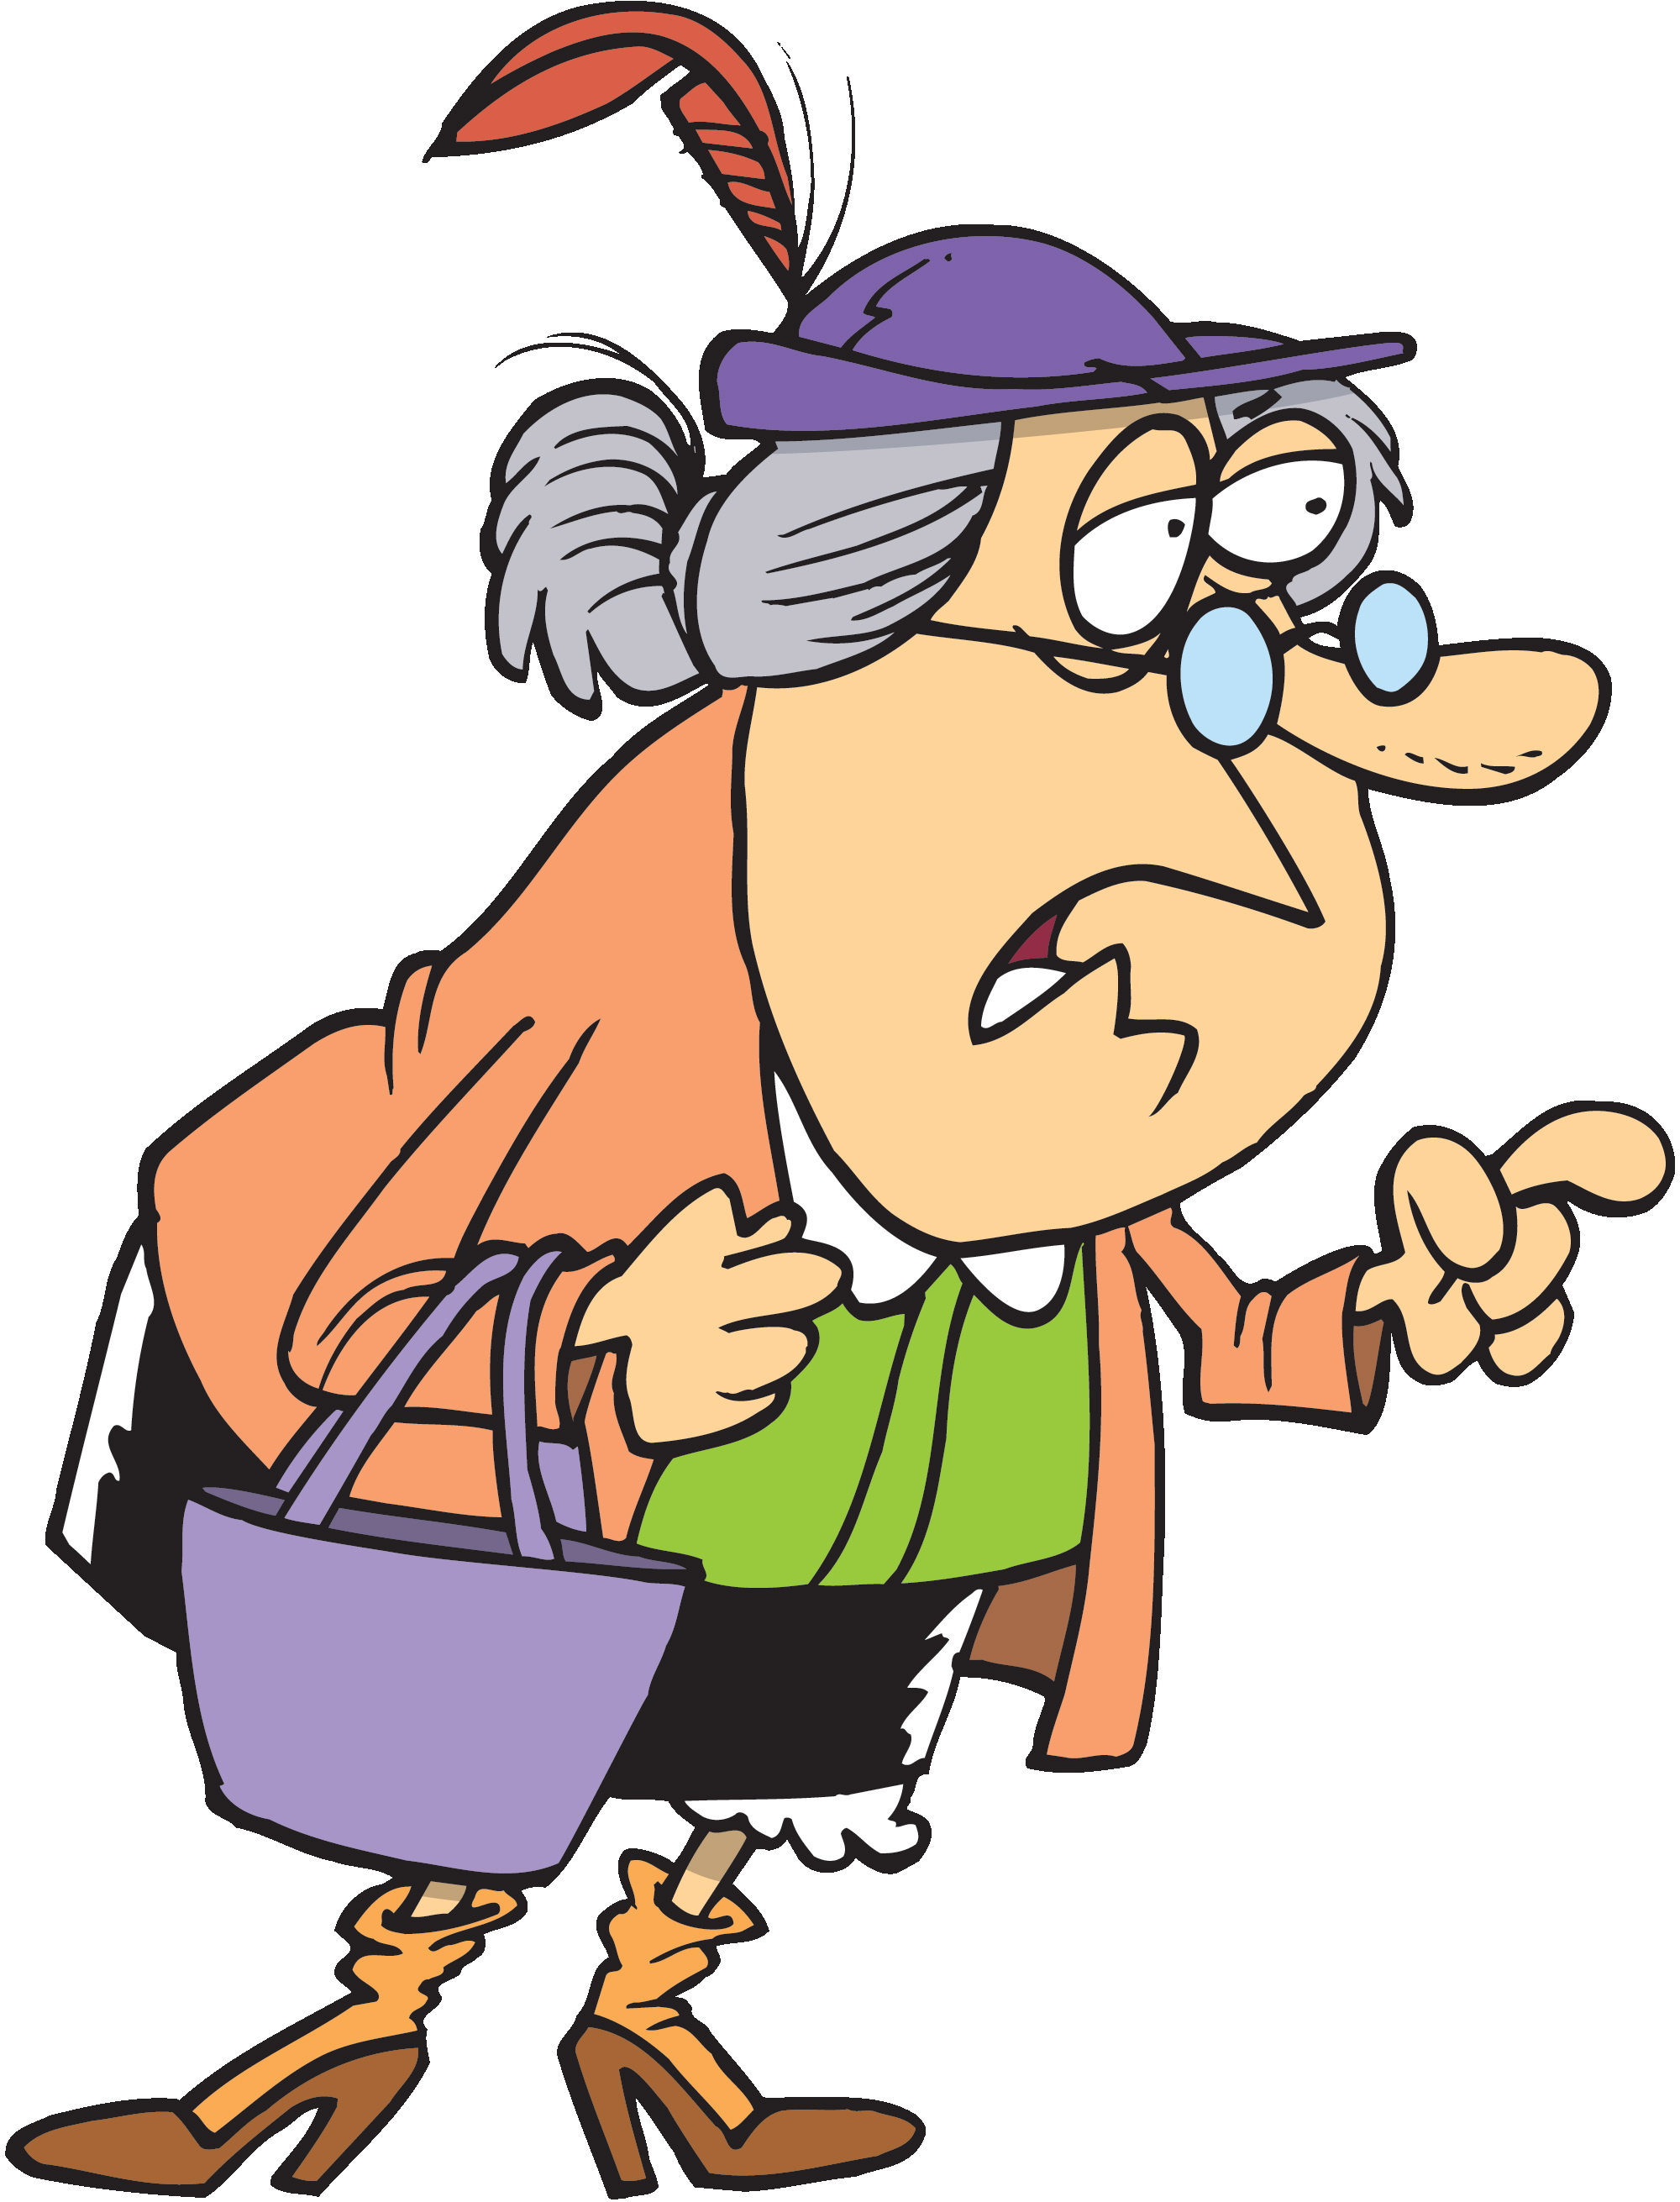 Old Woman Cartoon Clipart .